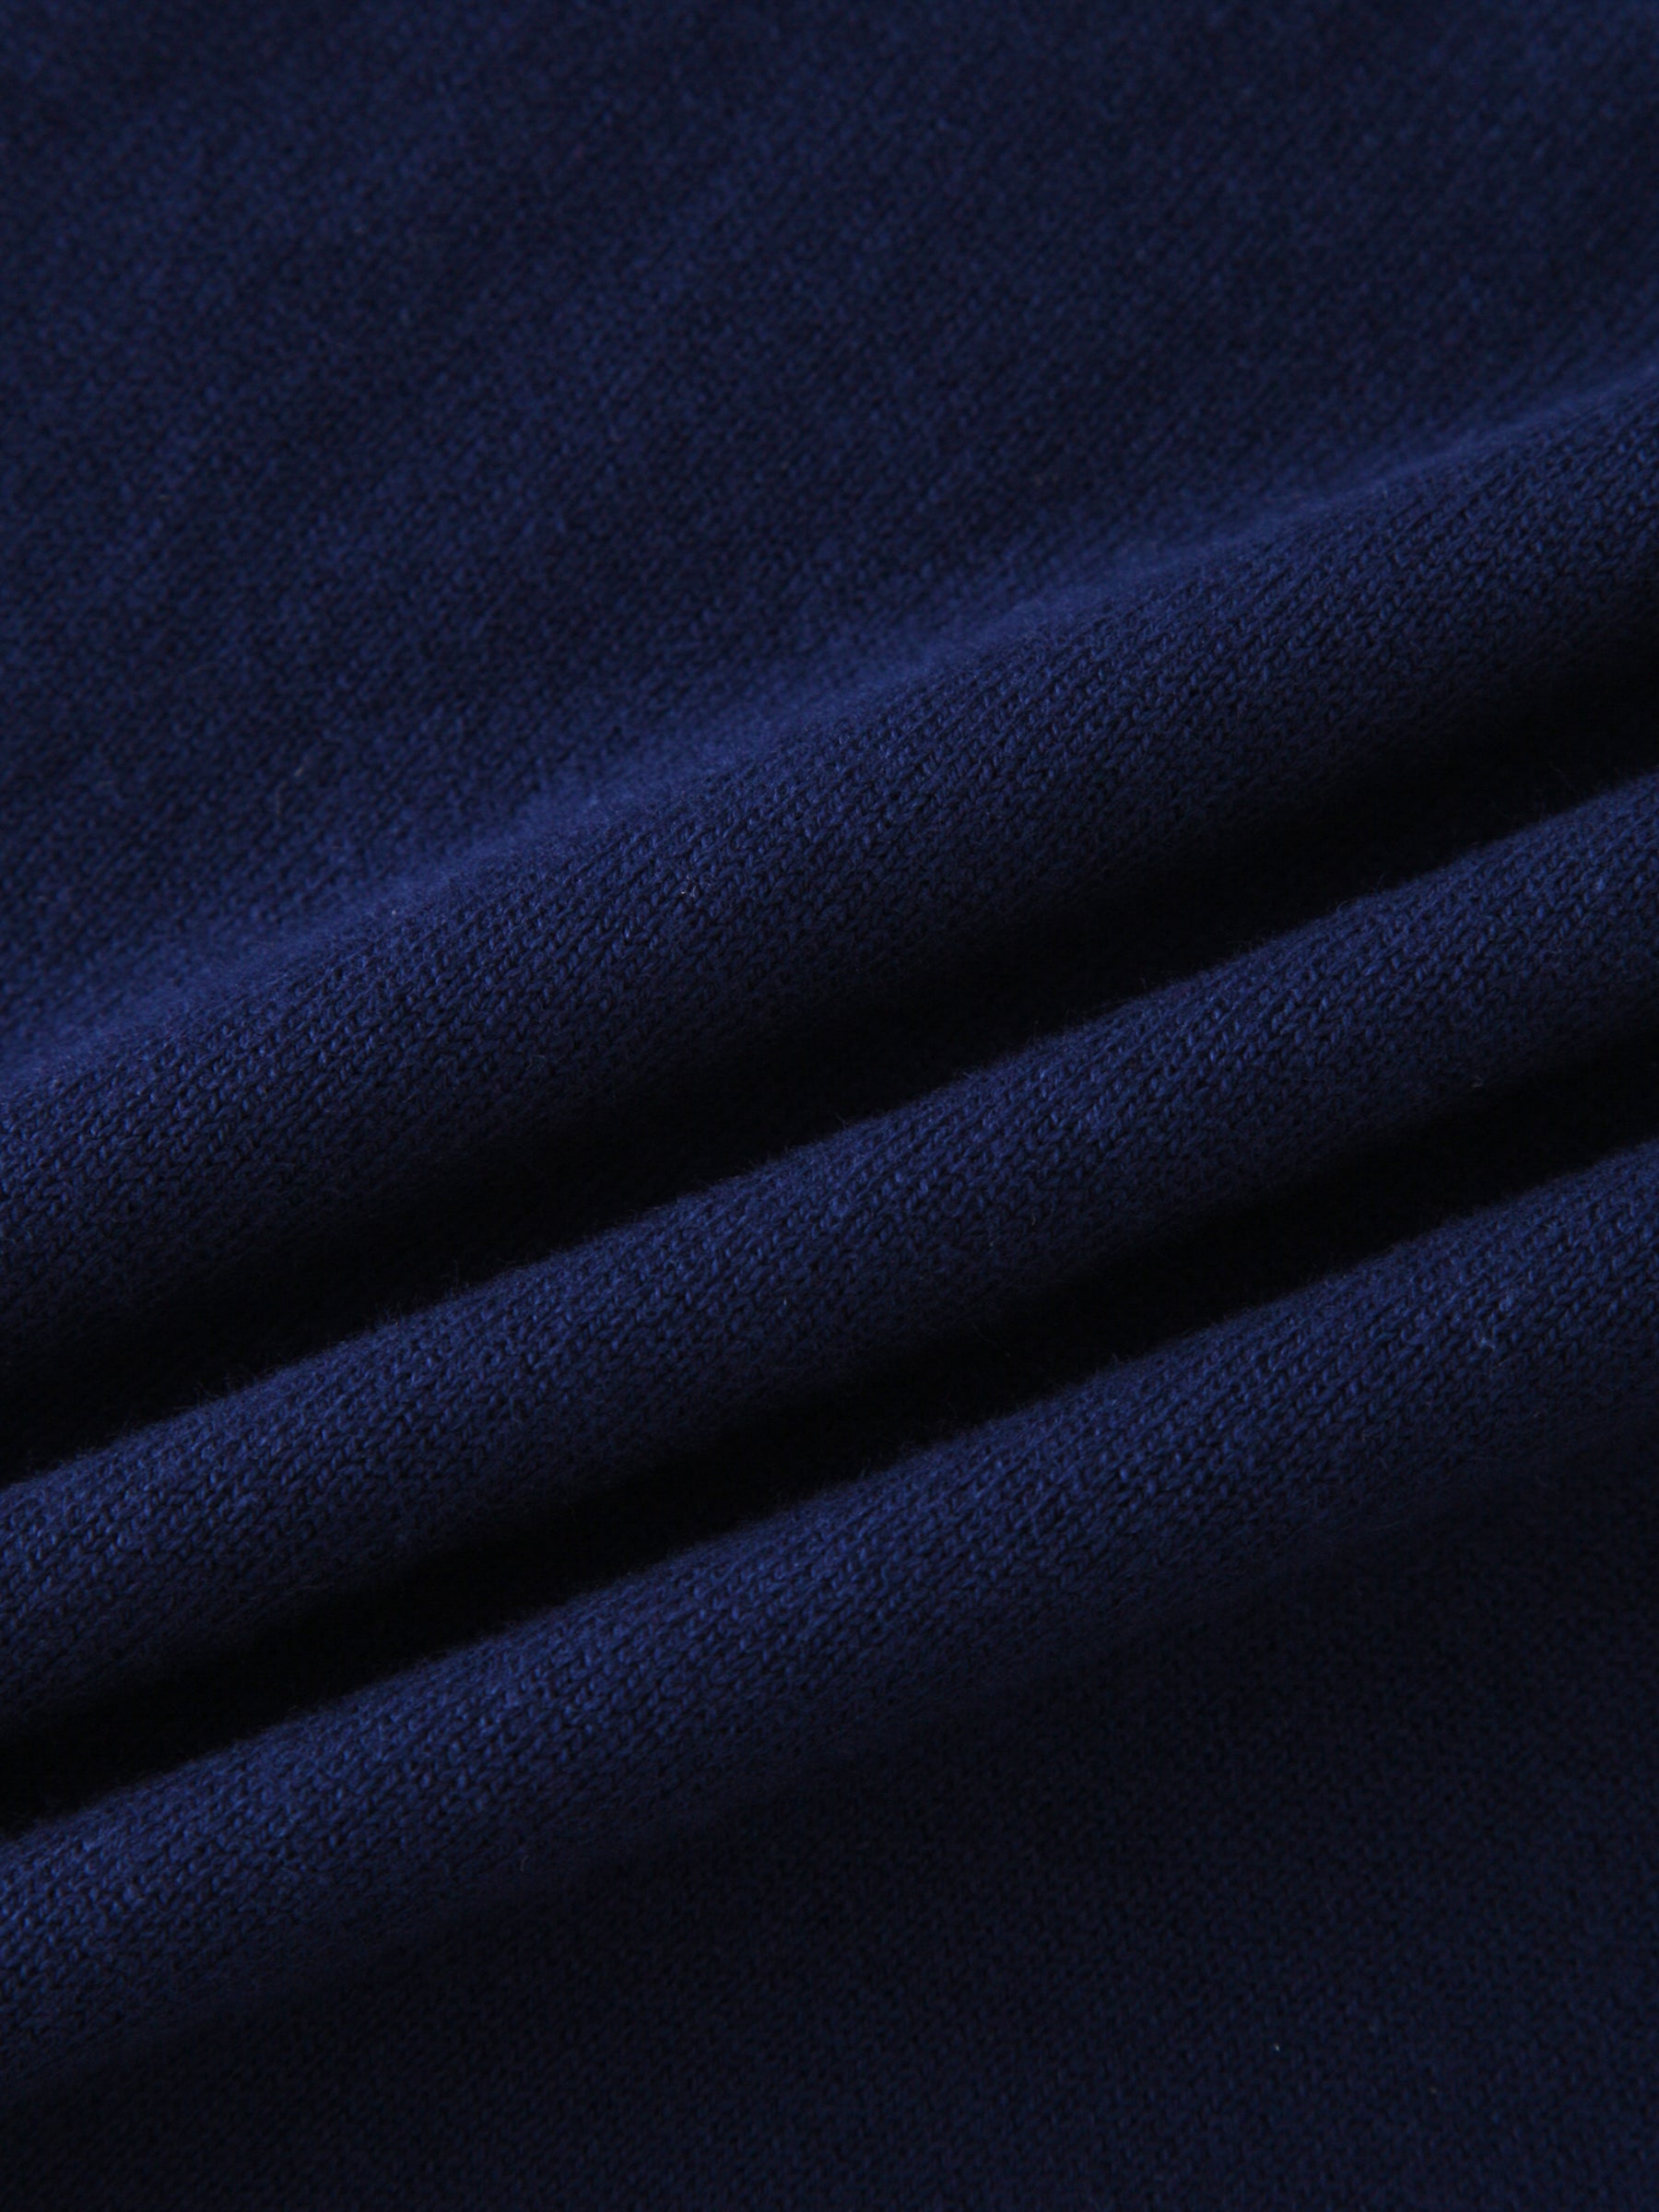 Jersey ligero extragrande-Azul marino